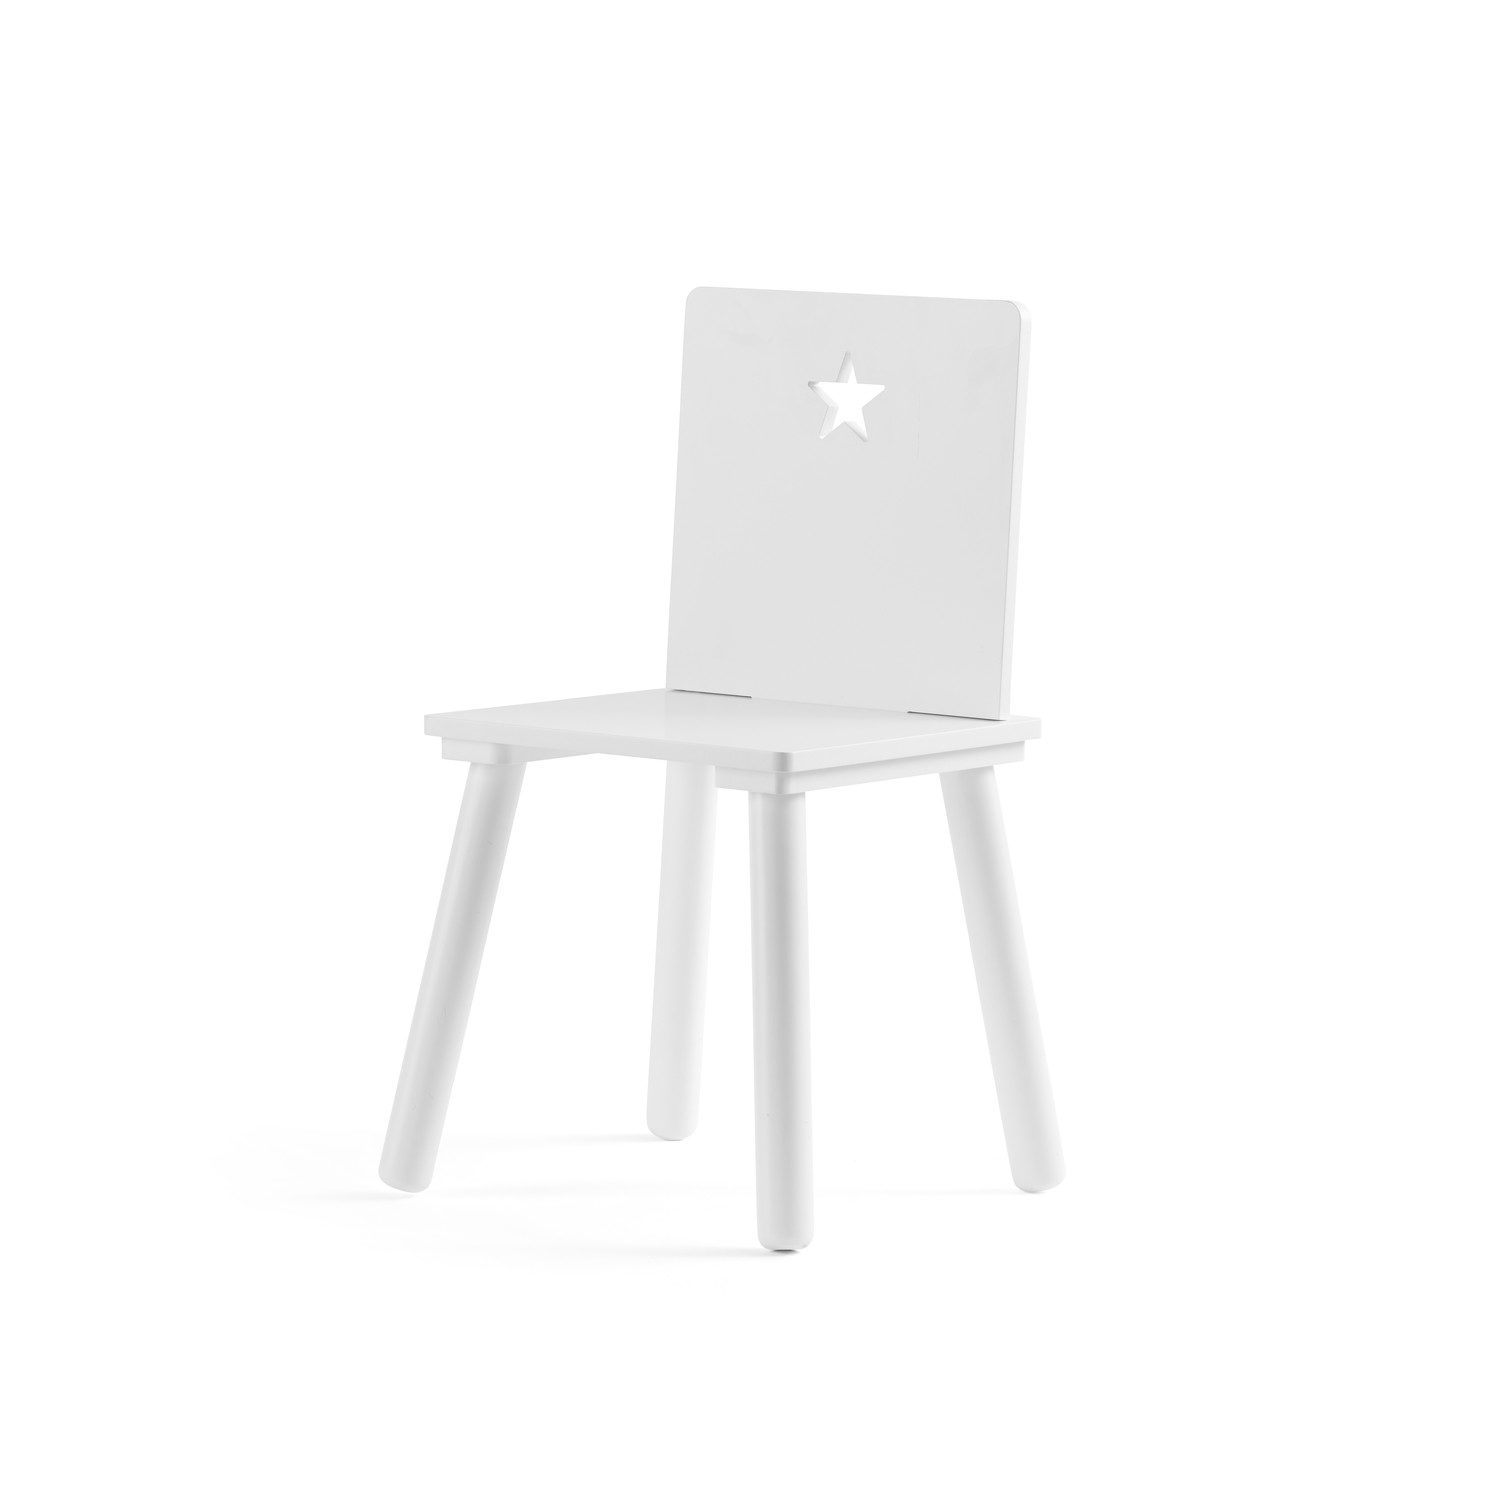 Stuhl Star weiß Sitzhöhe 30 cm